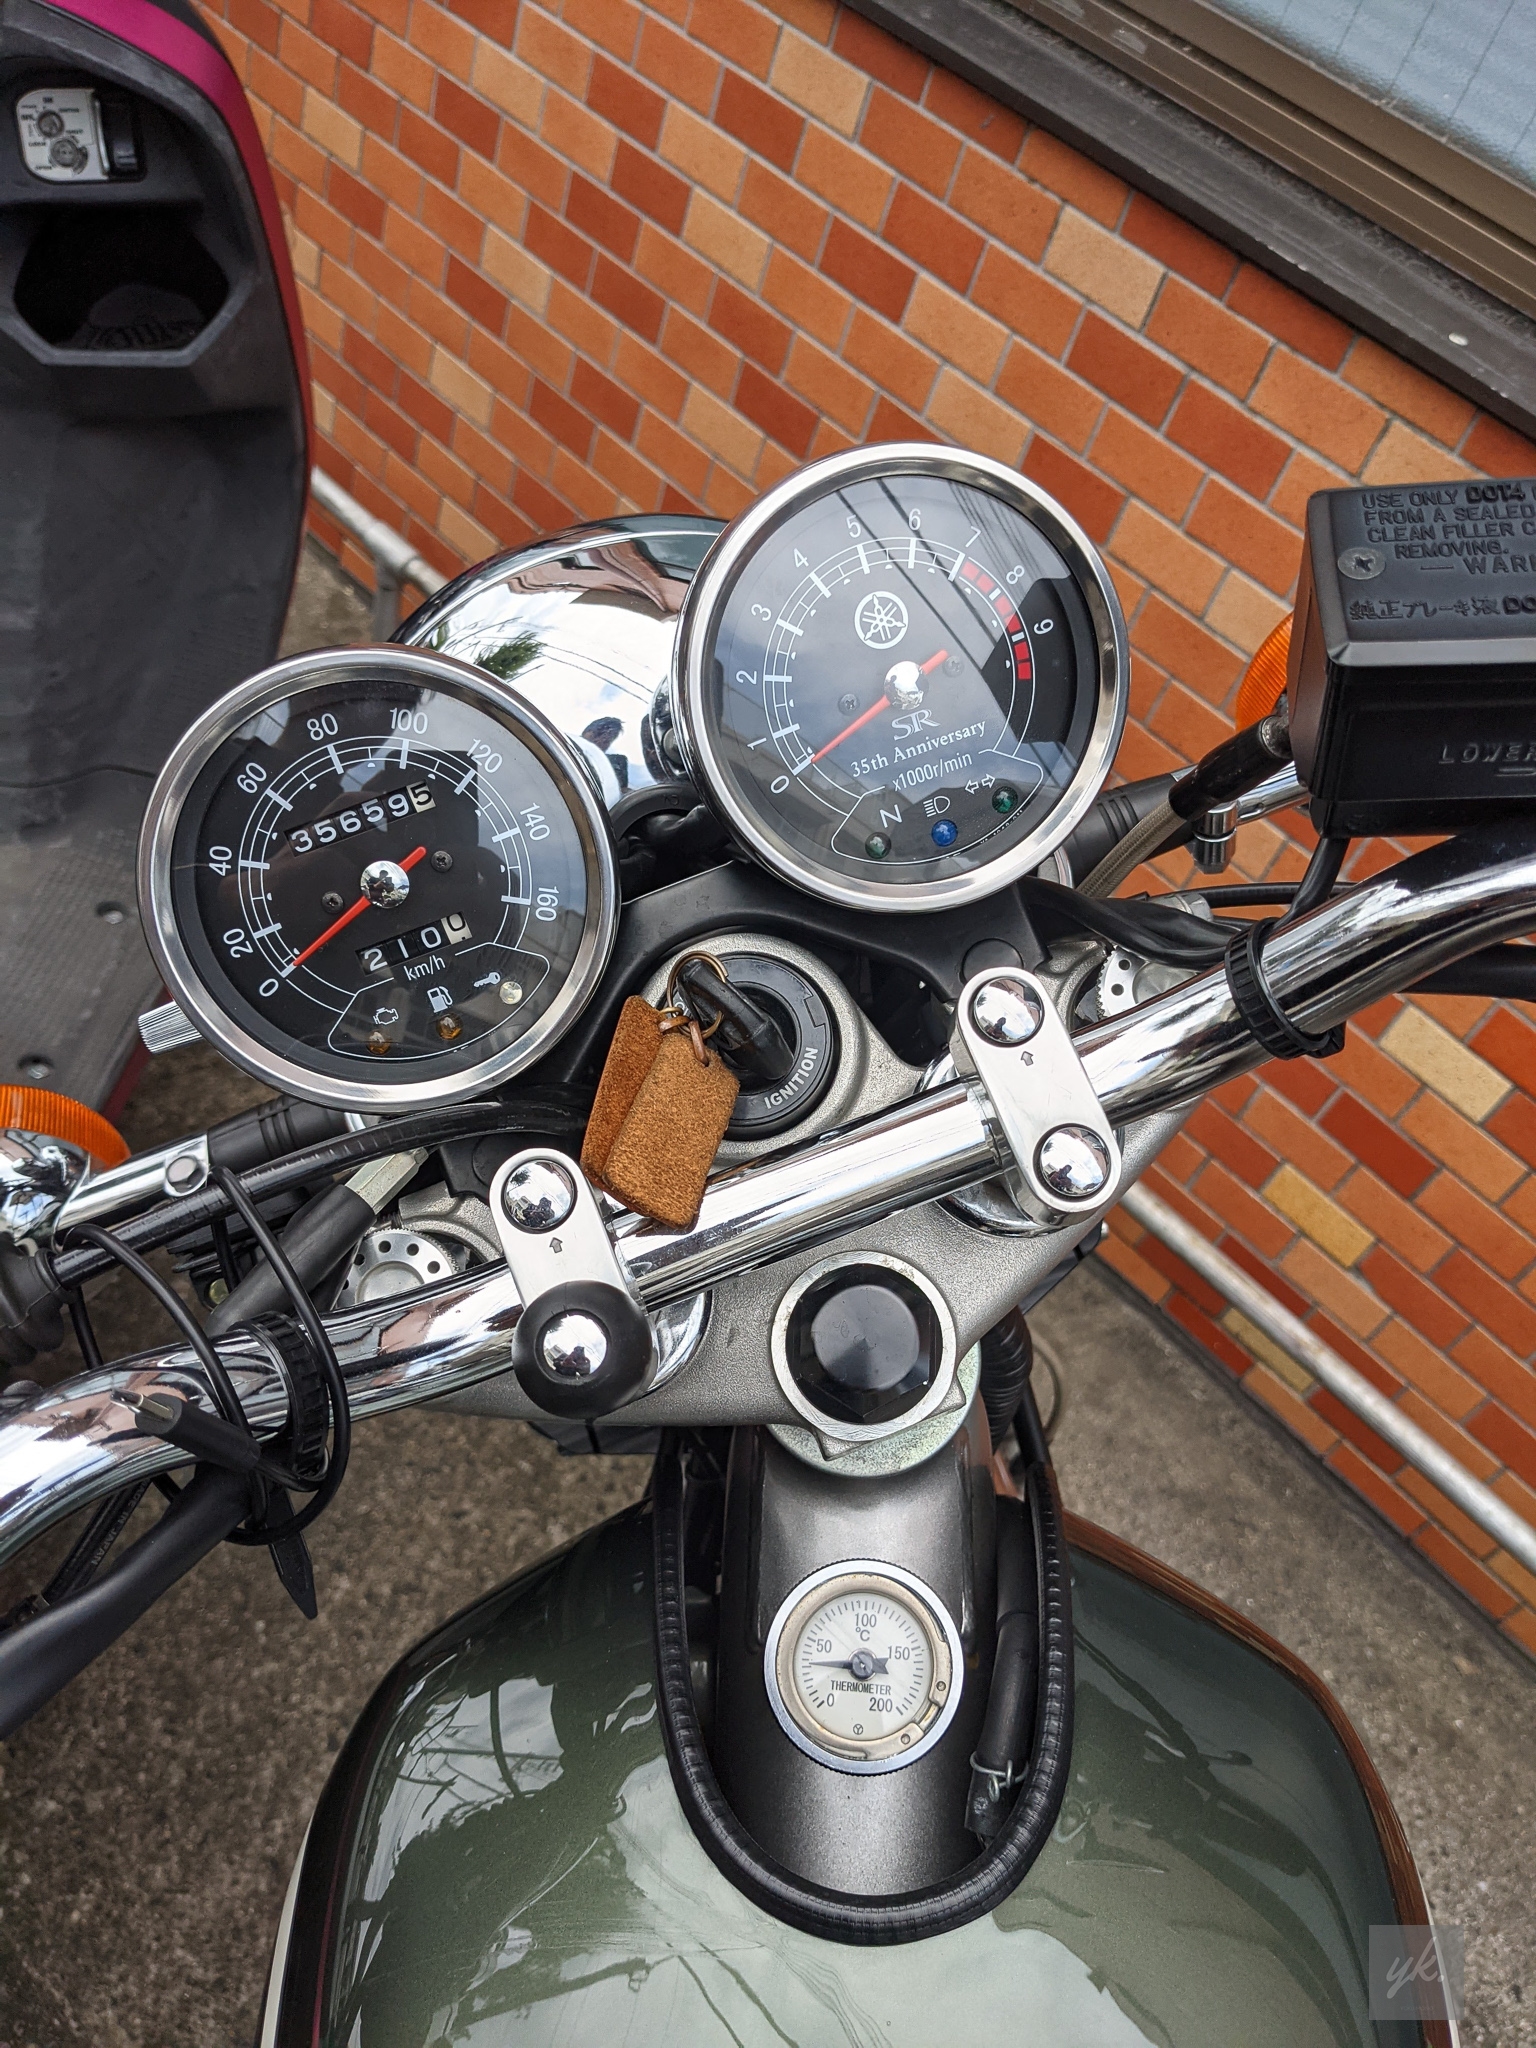 SR400にRR油温計をつけてみました。｜yoku-mono Motorcycle&Bicycle Diary